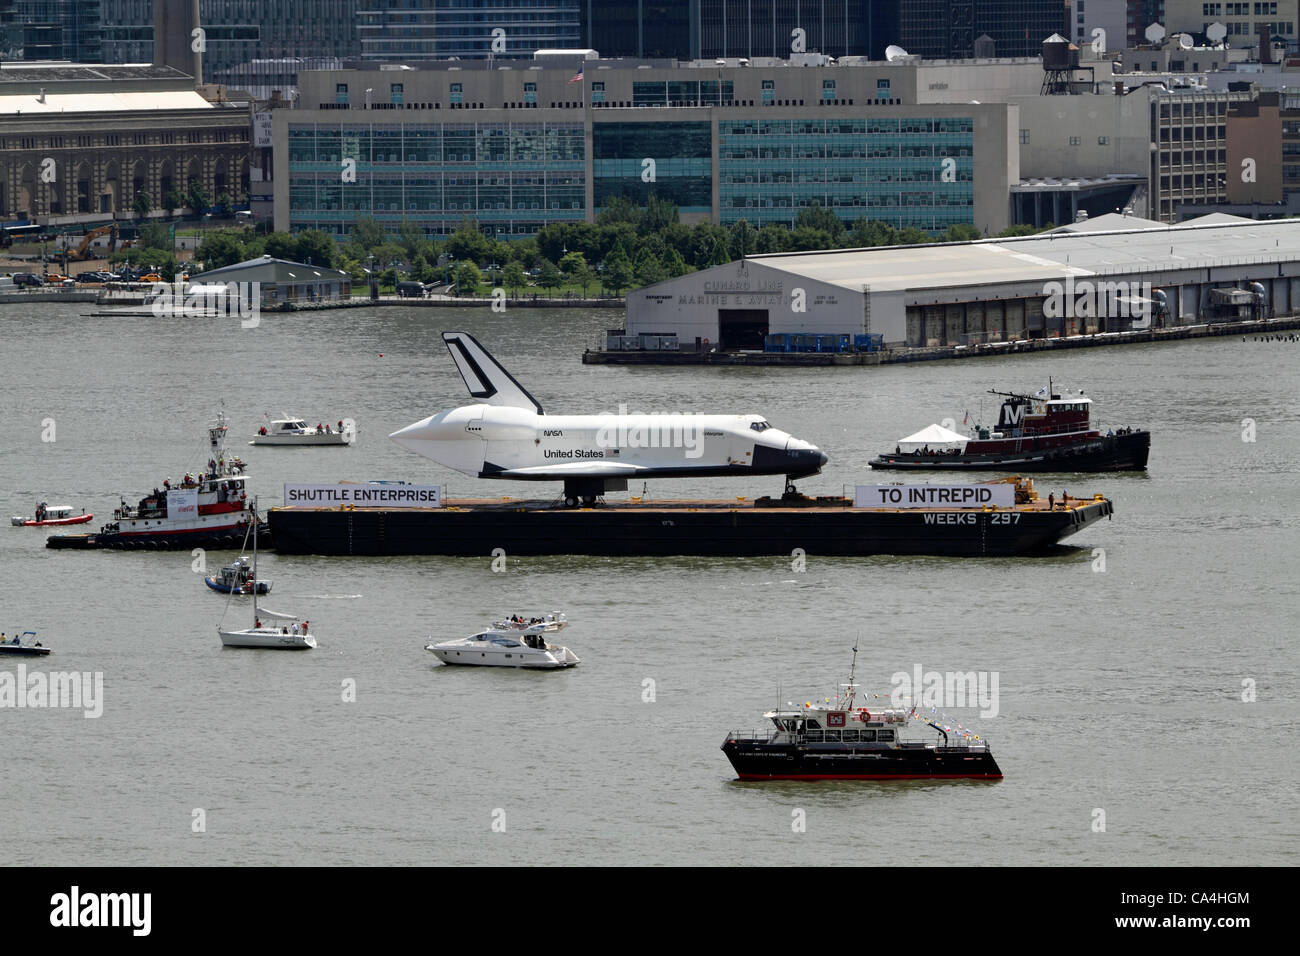 Das Space Shuttle Enterprise auf dem Hudson River auf dem Weg zum Intrepid Sea, Air and Space Museum. 6. Juni 2012. New York City, NY, USA Stockfoto